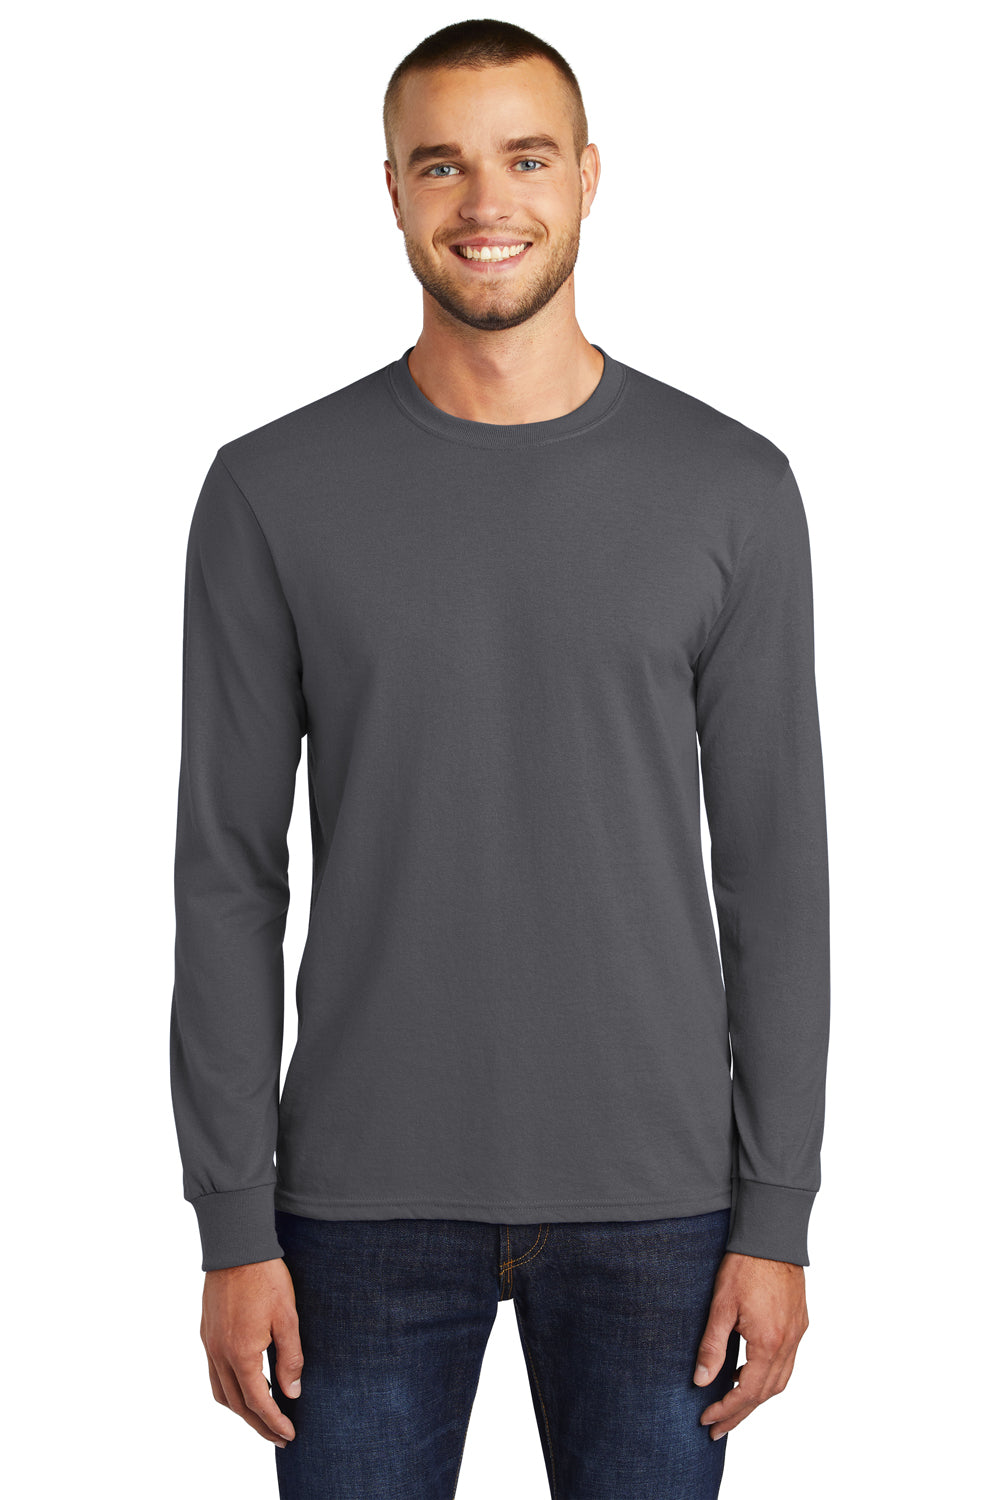 Port & Company PC55LS Mens Core Long Sleeve Crewneck T-Shirt Charcoal Grey Front